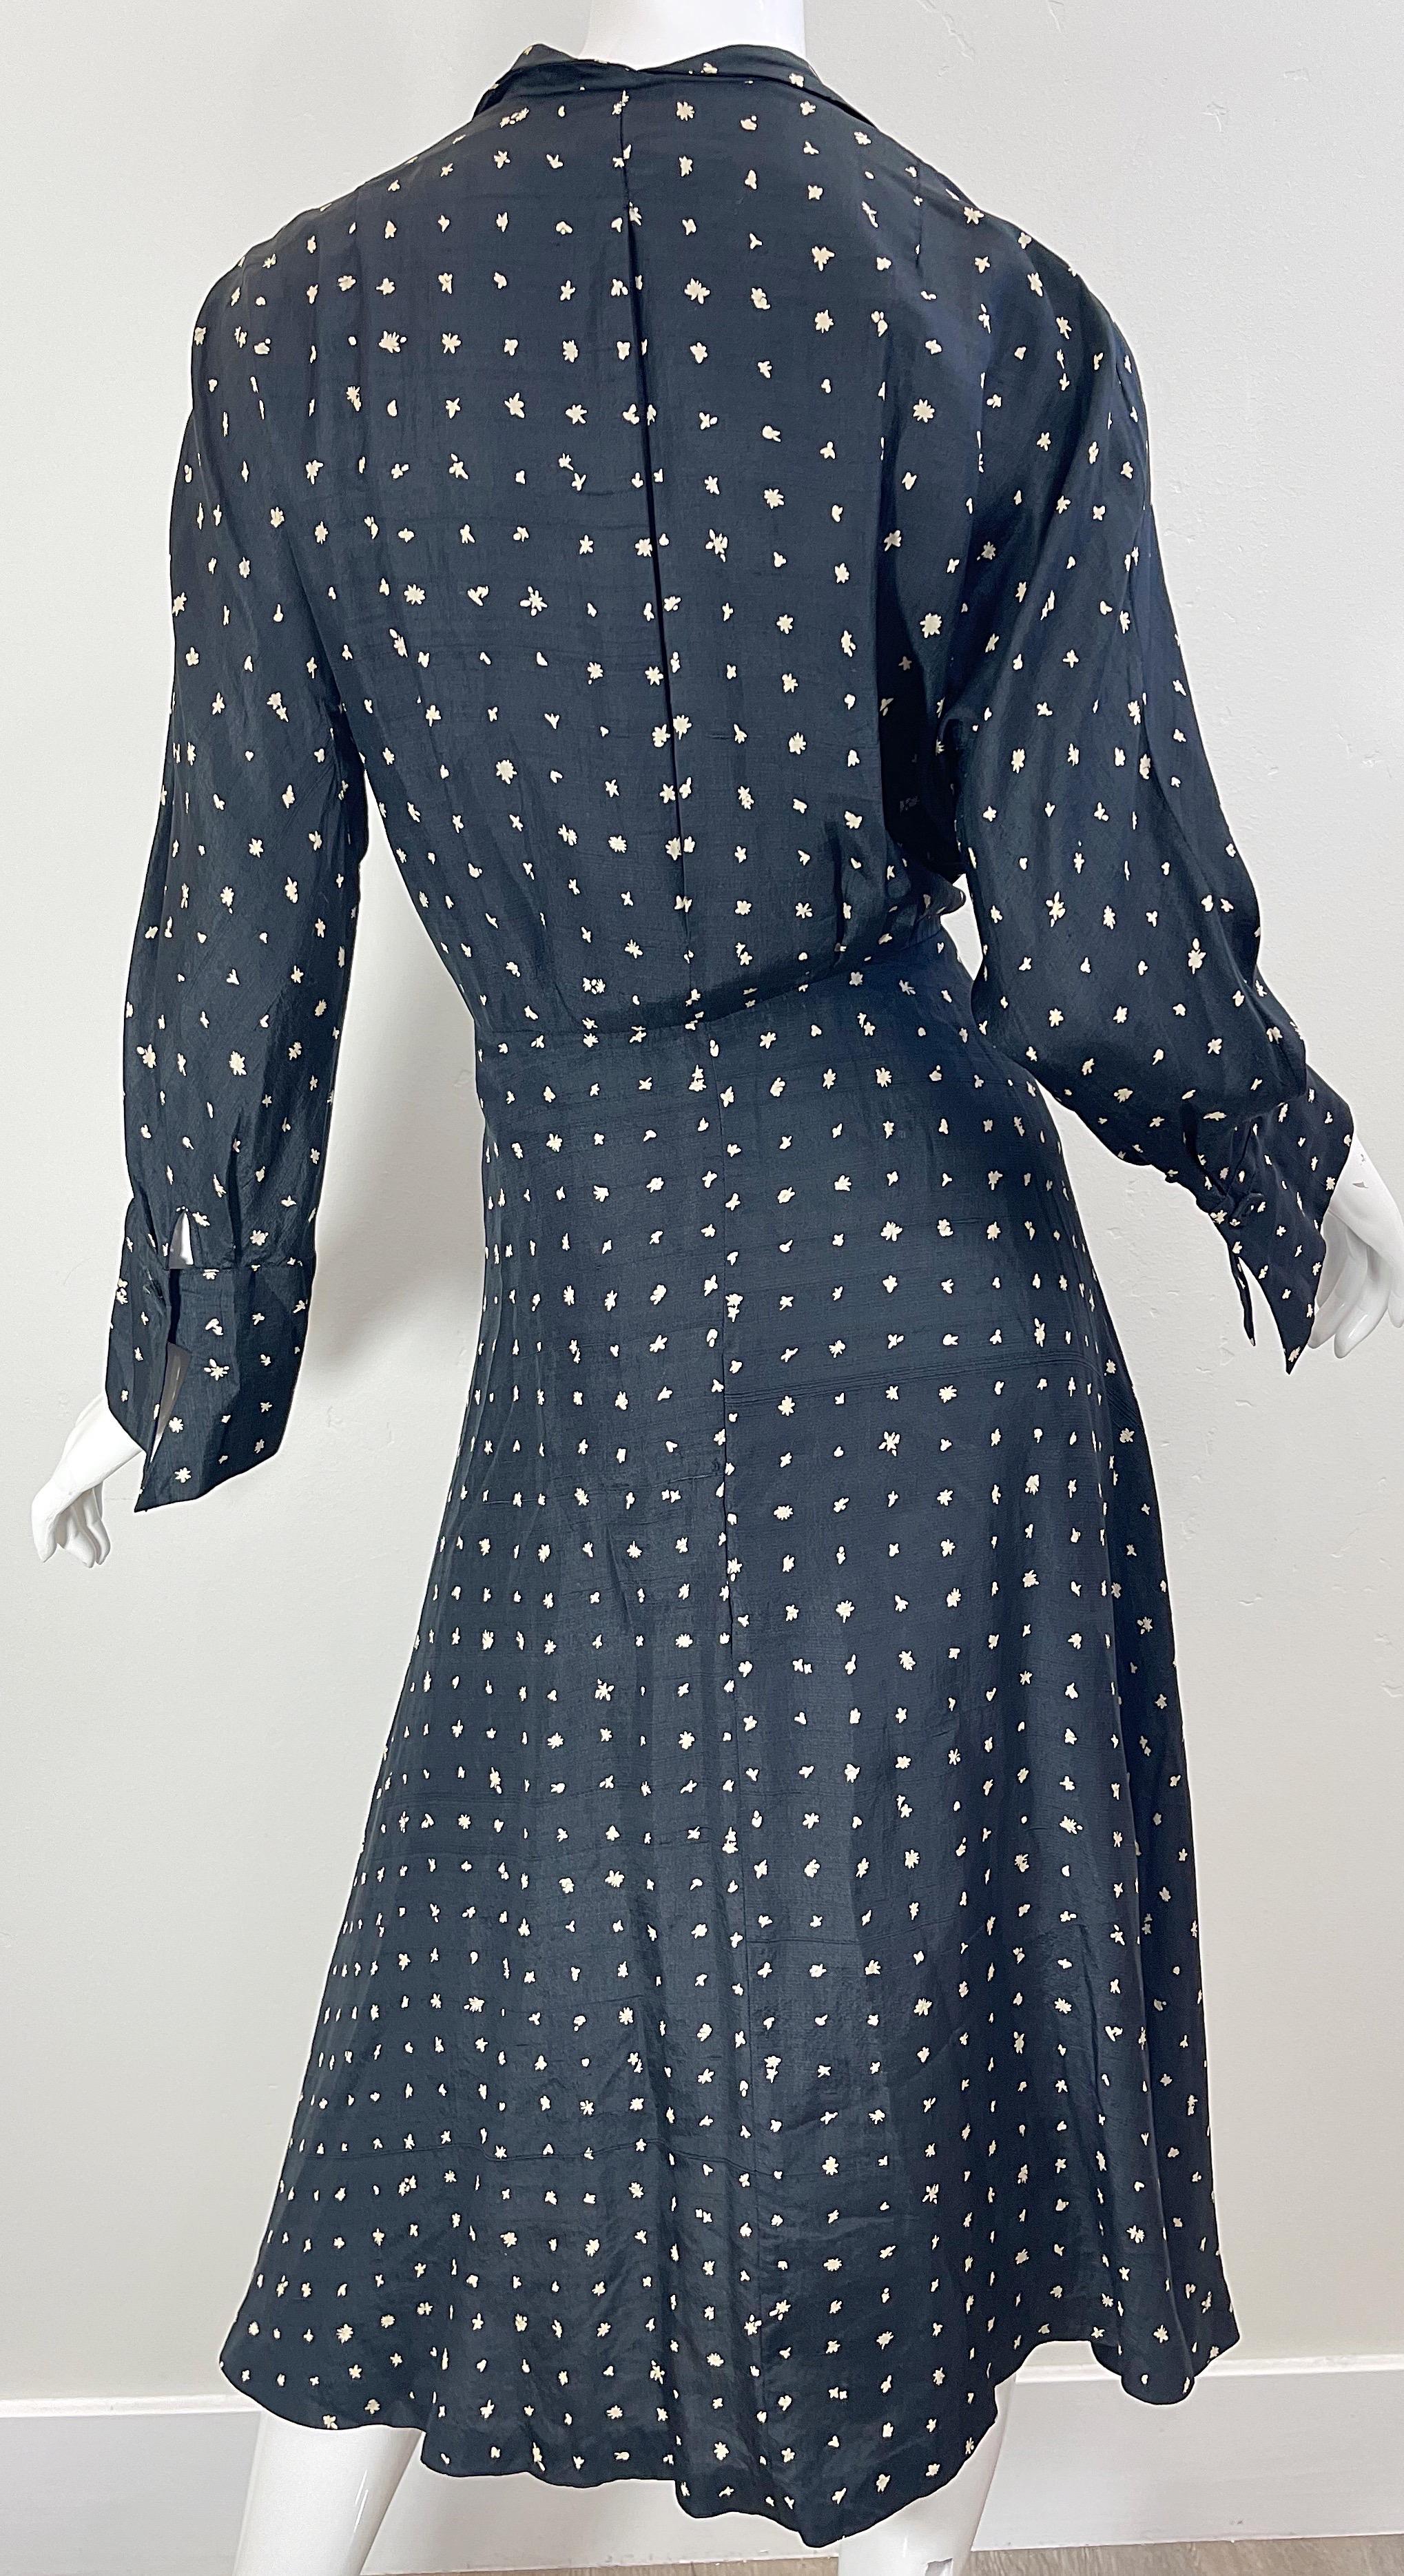 1950s Roberta Lee Originals Black and White Flower Print Vintage 50s Dress For Sale 1